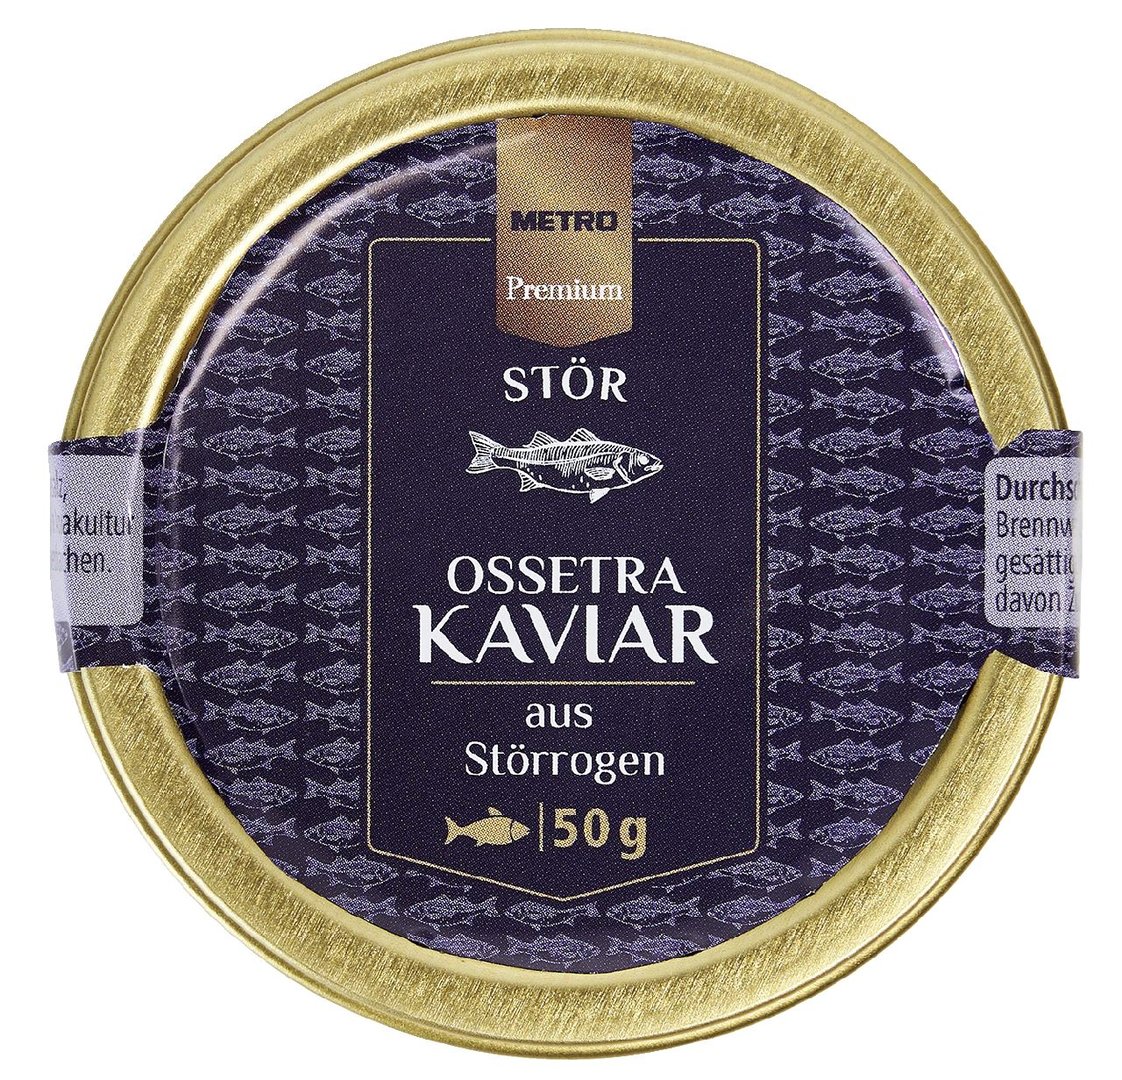 METRO Premium - Ossetra-Kaviar aus Stör-Rogen - 50 g Packung